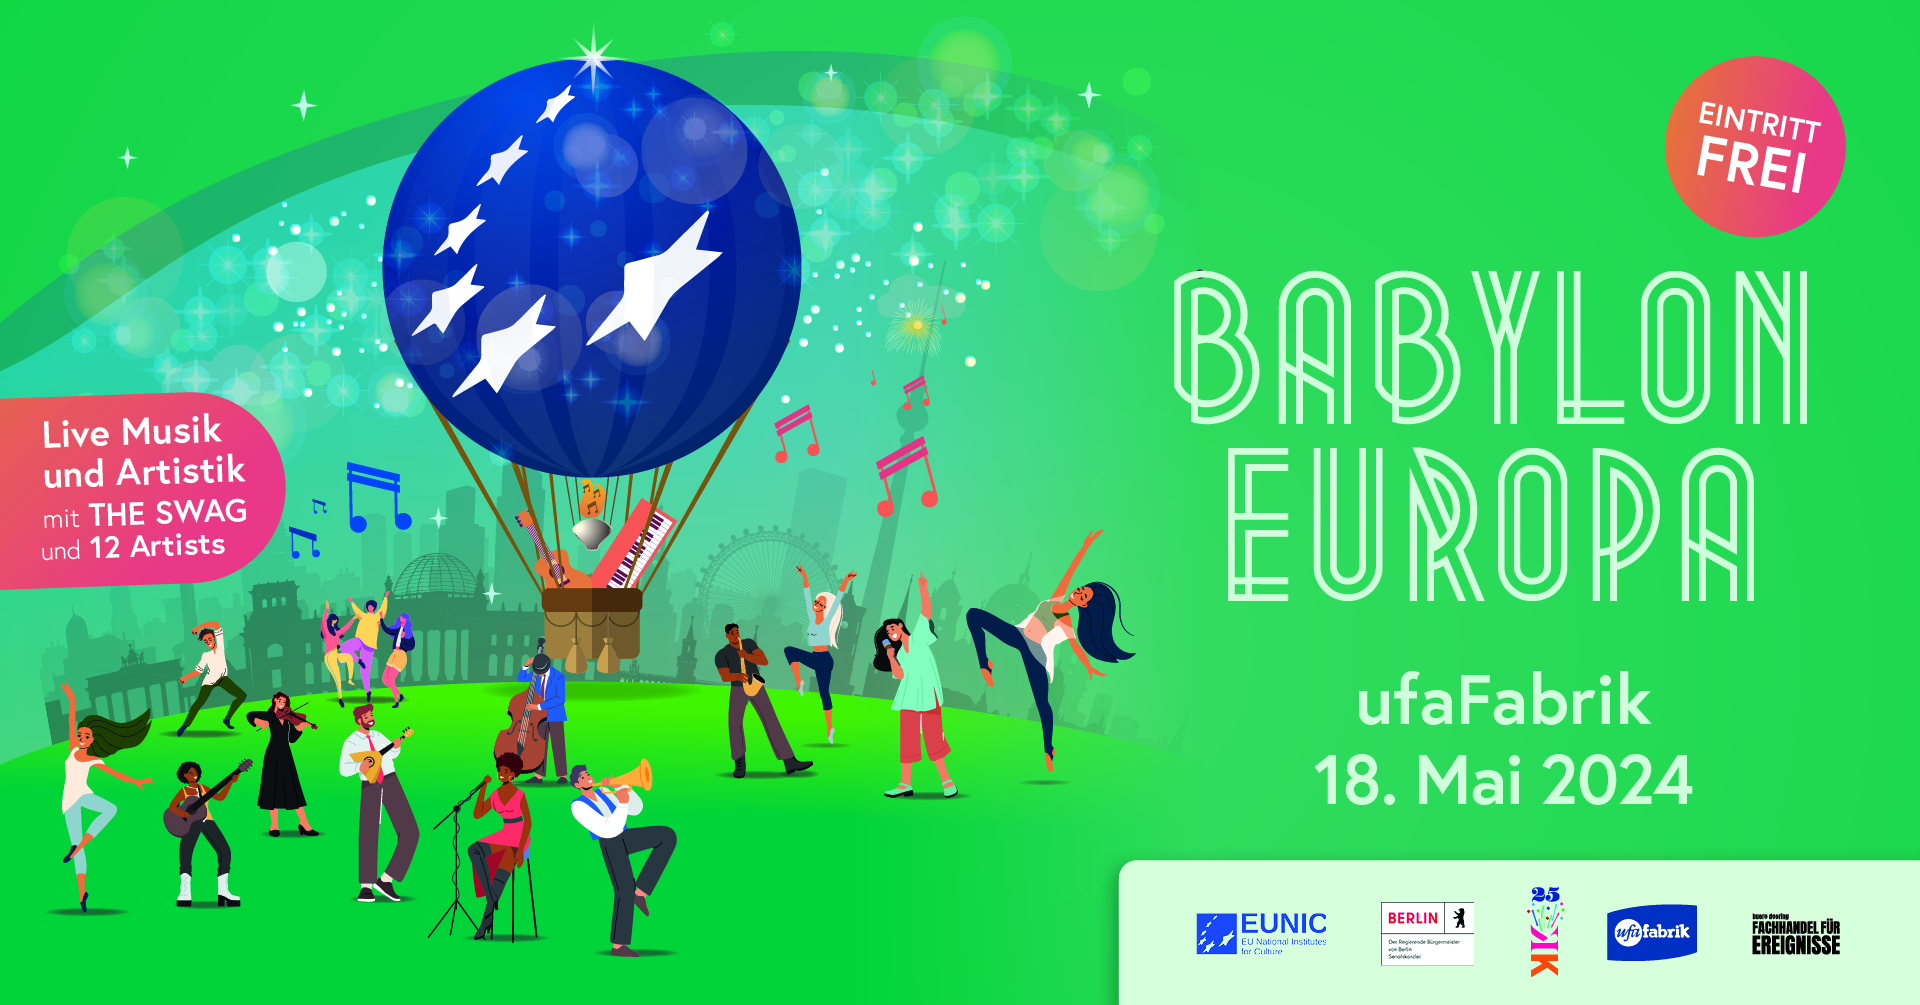 BABYLON EUROPA – feiert kulturelle Vielfalt beim Karneval der Kulturen am 27. Mai in der Ufafabrik